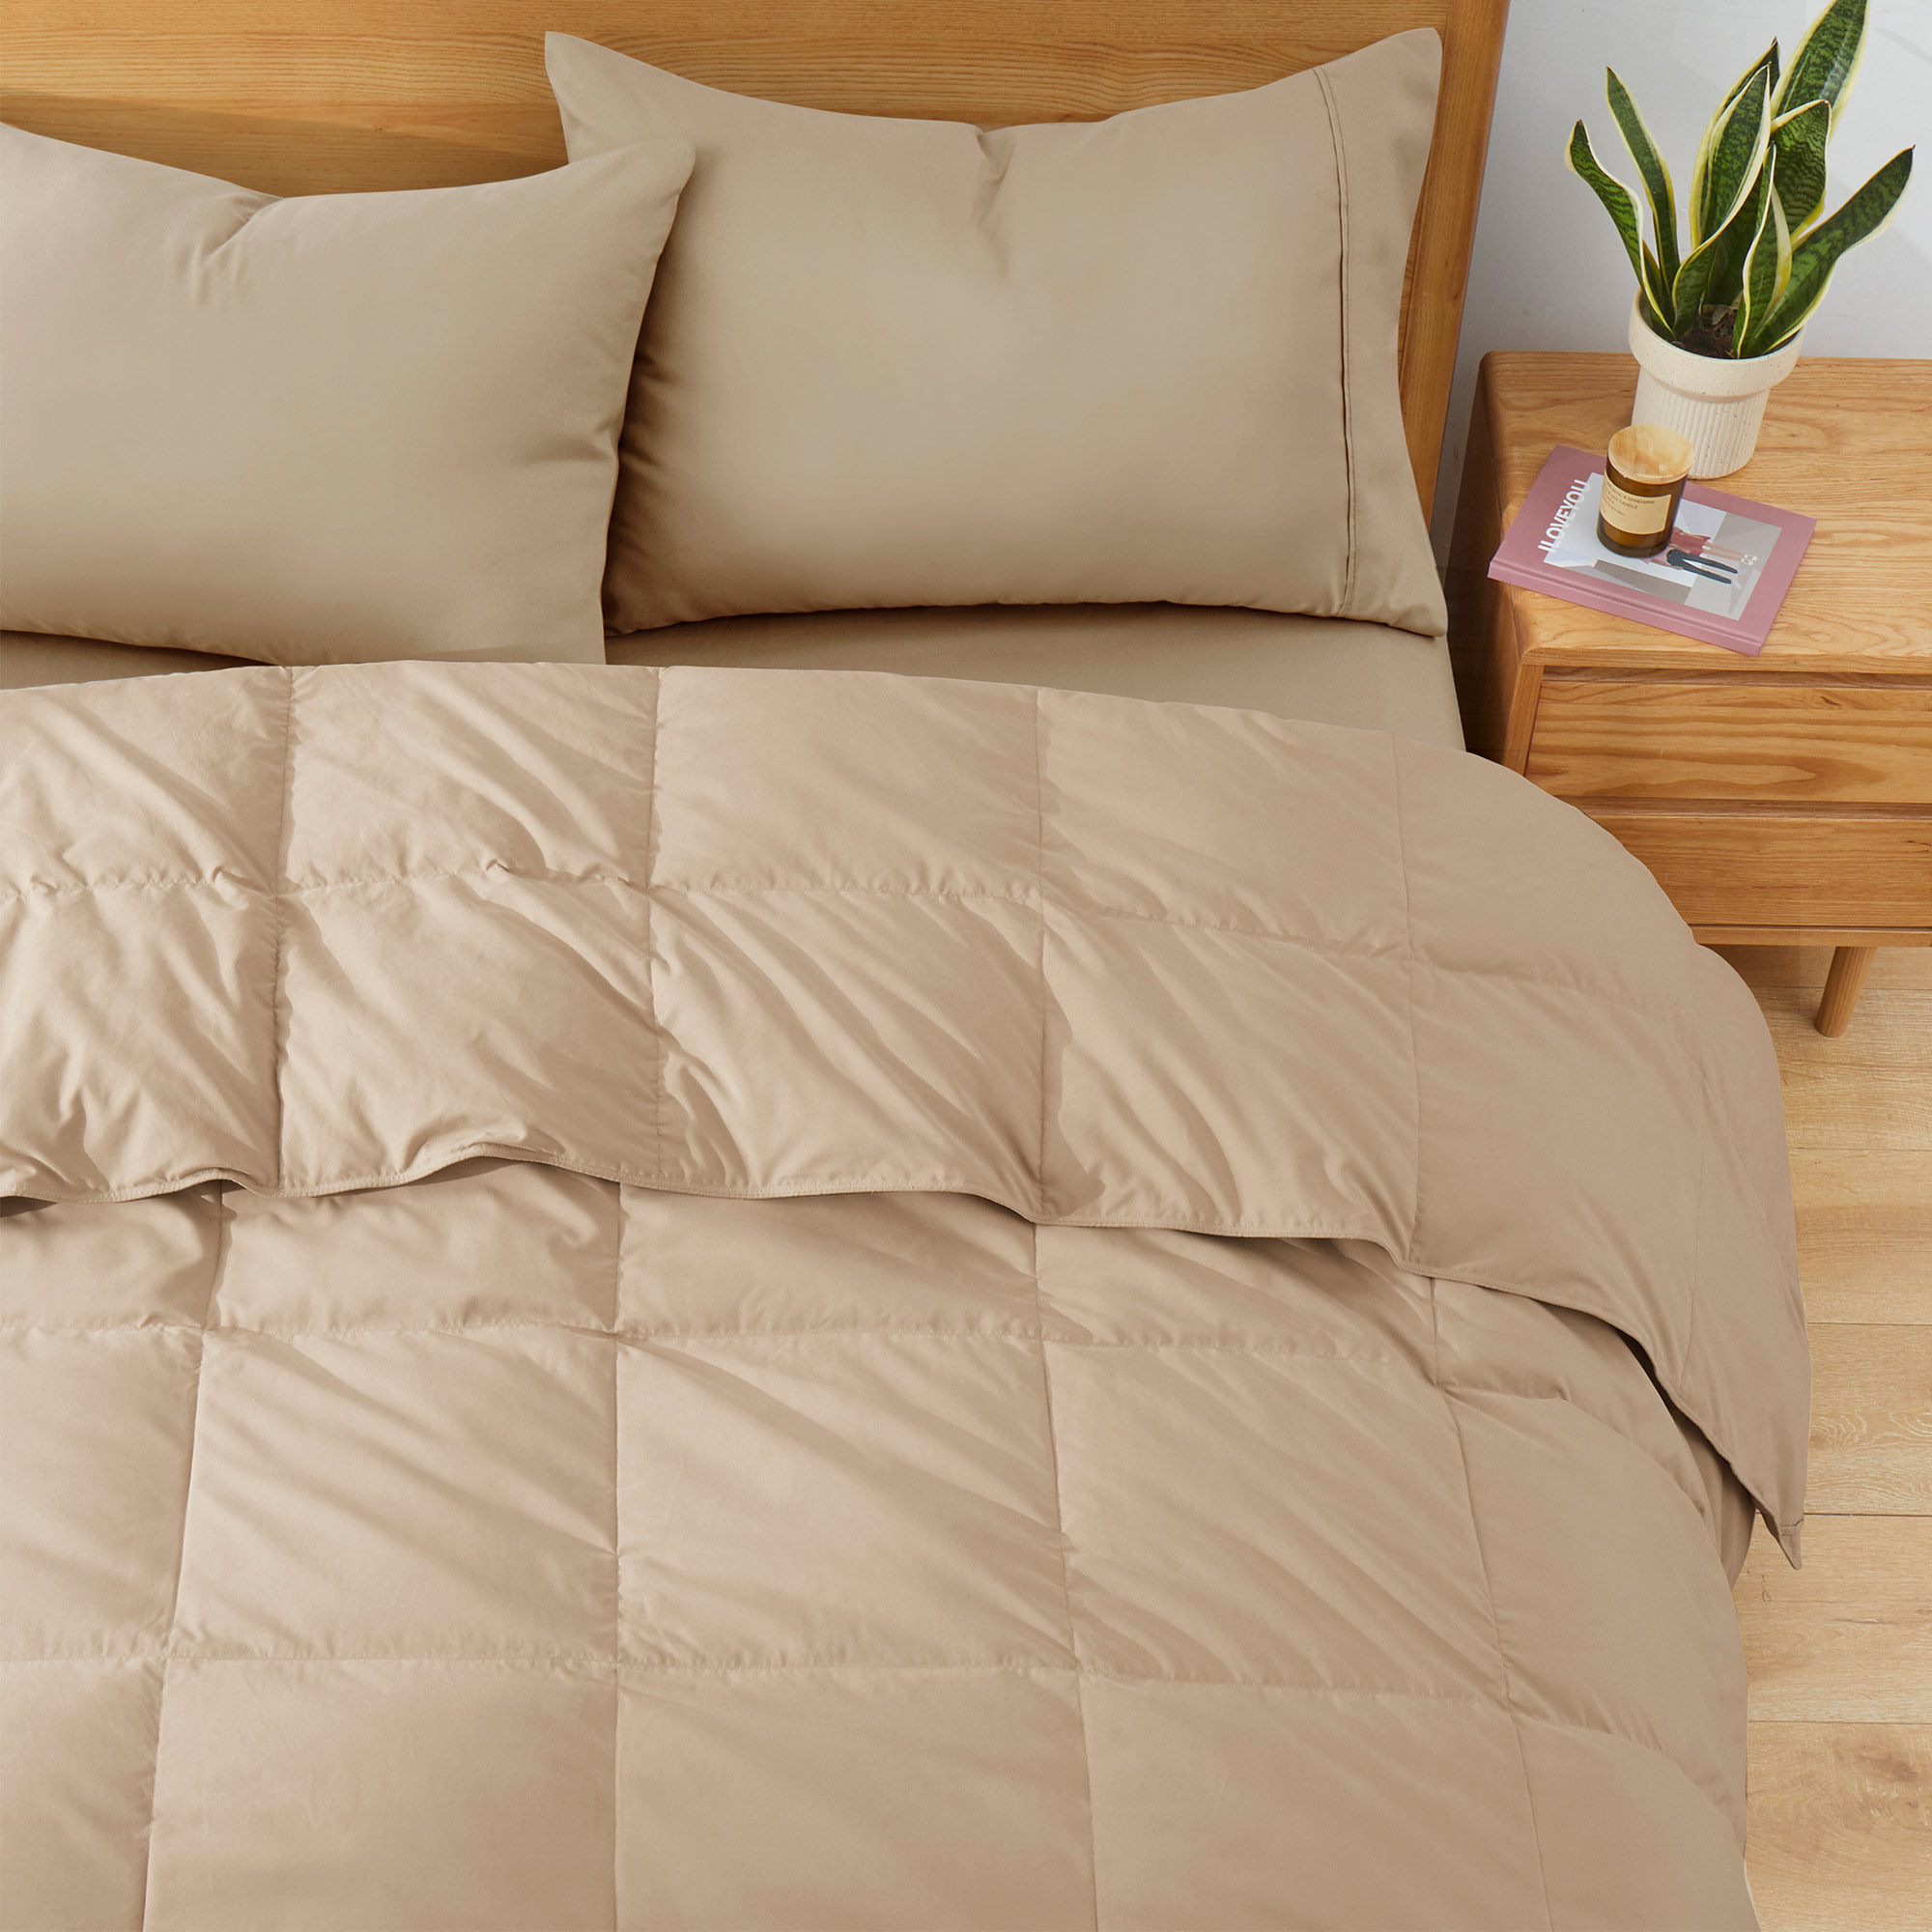 Lightweight Goose Down Feather Fiber Comforter, Soft And Fluffy Comforter For Restful Sleep - Full/Queen